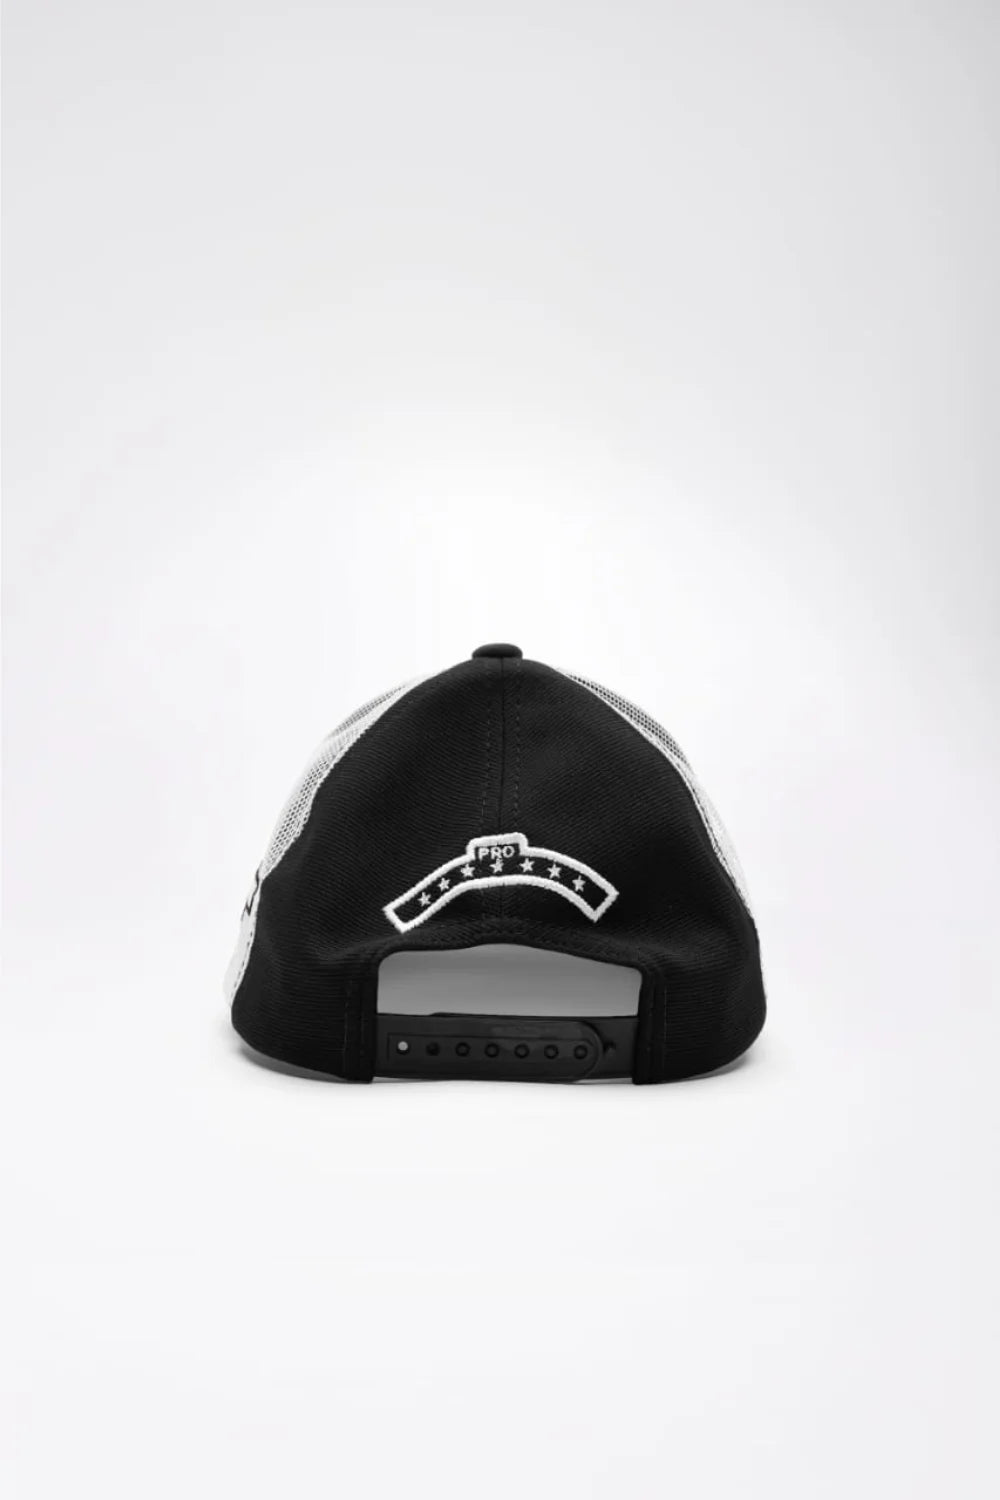 Unisex Black & White Trucker cap, has a visor by One Player